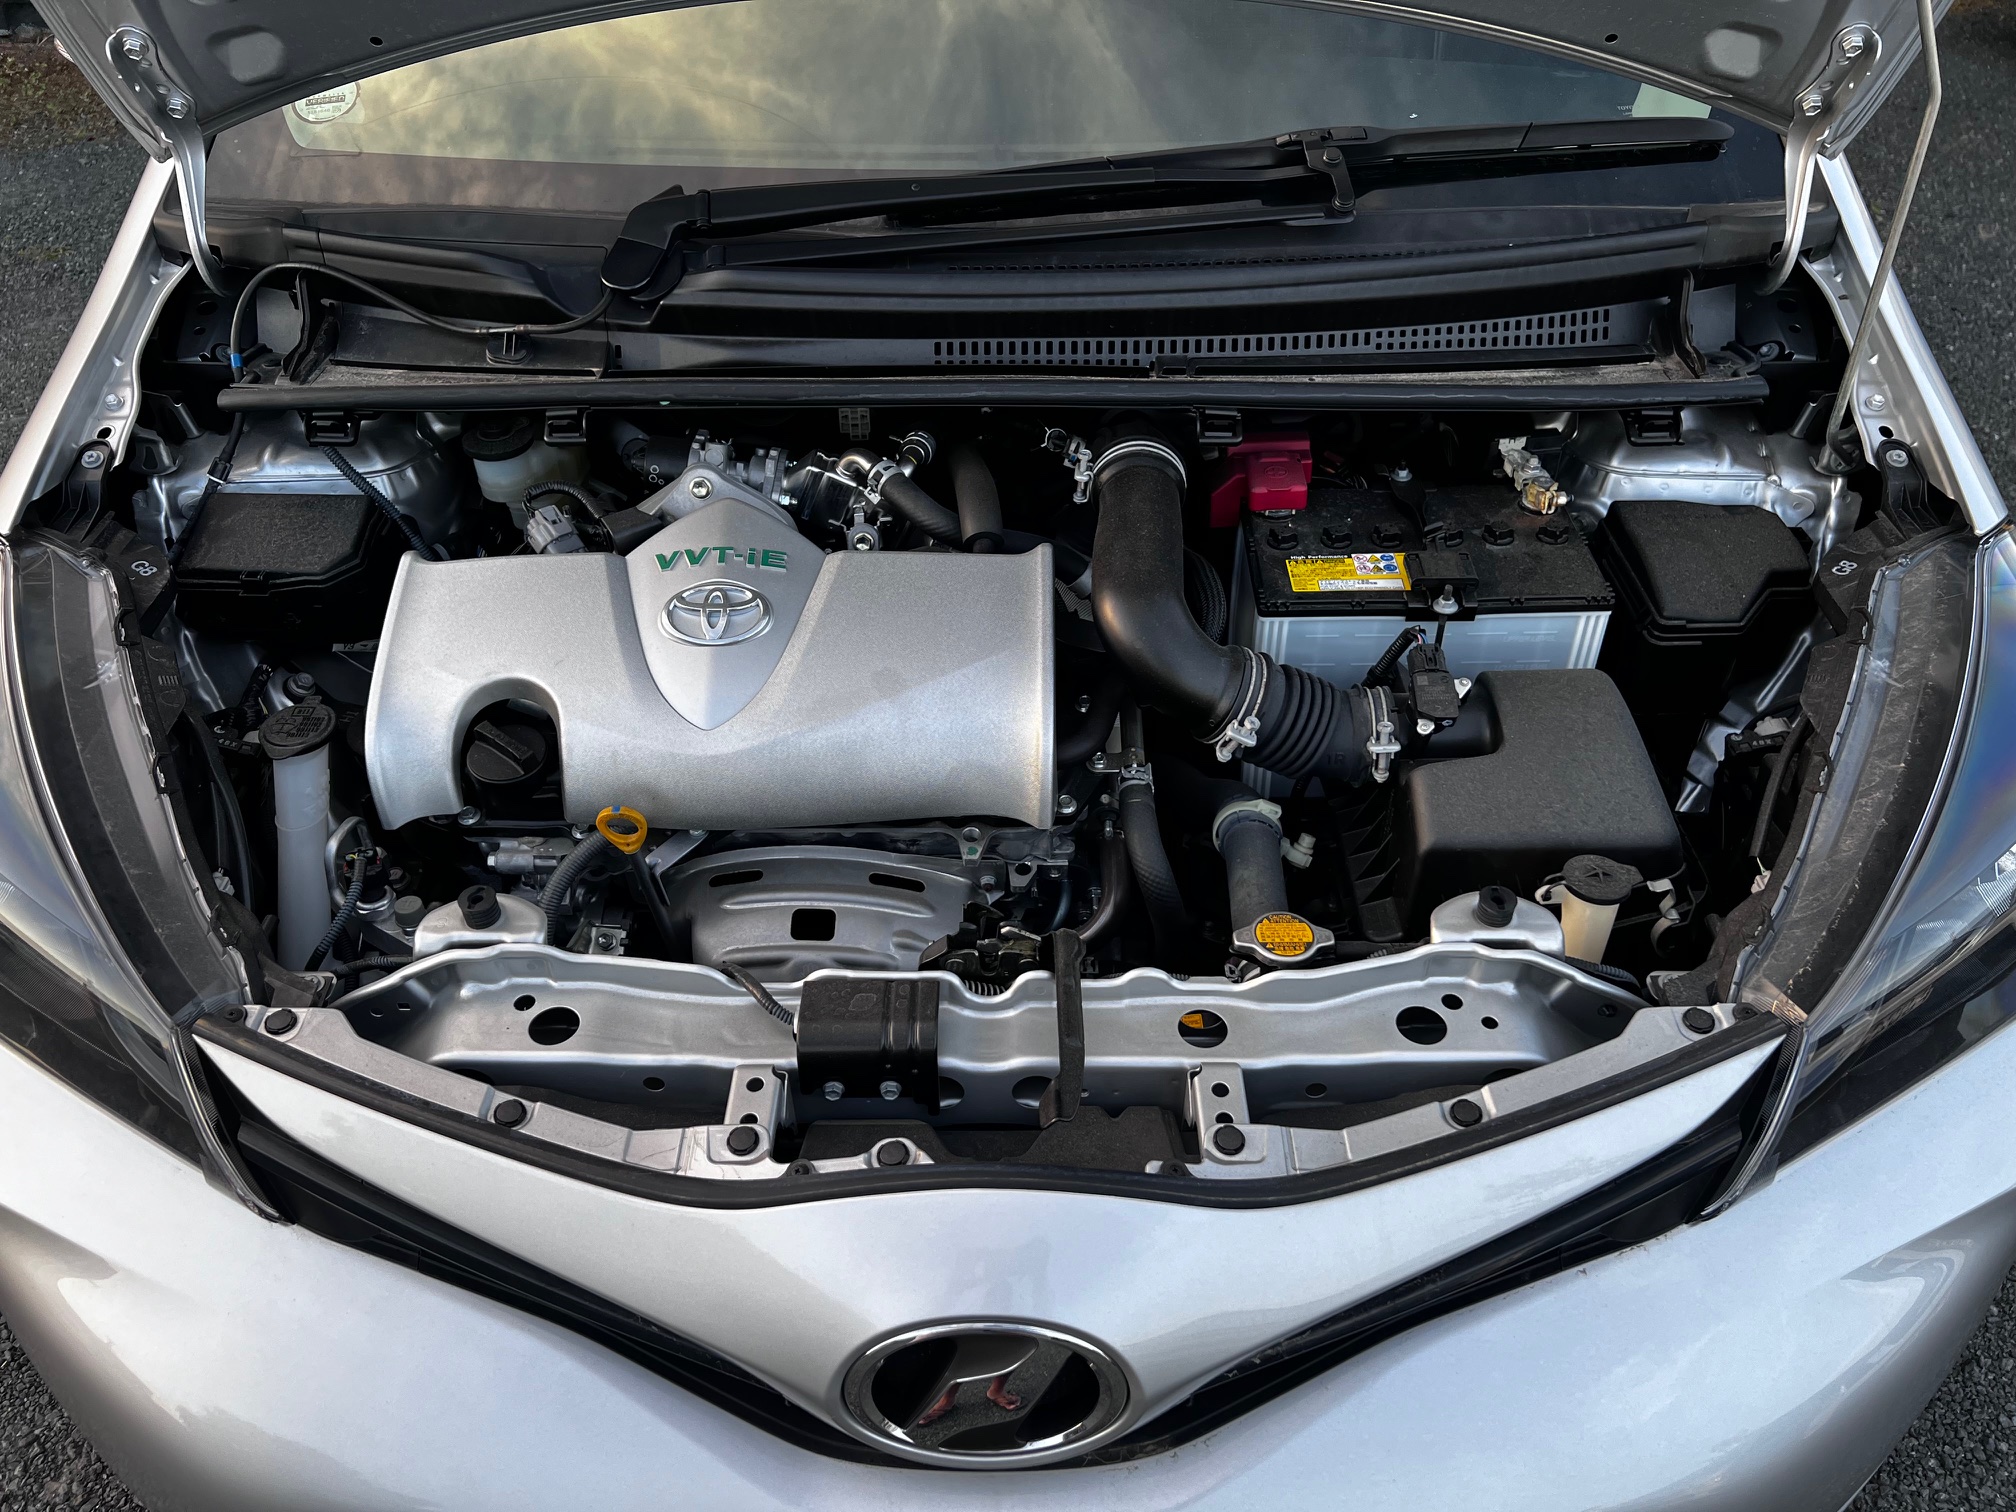 Toyota Vitz 2014 Image 7